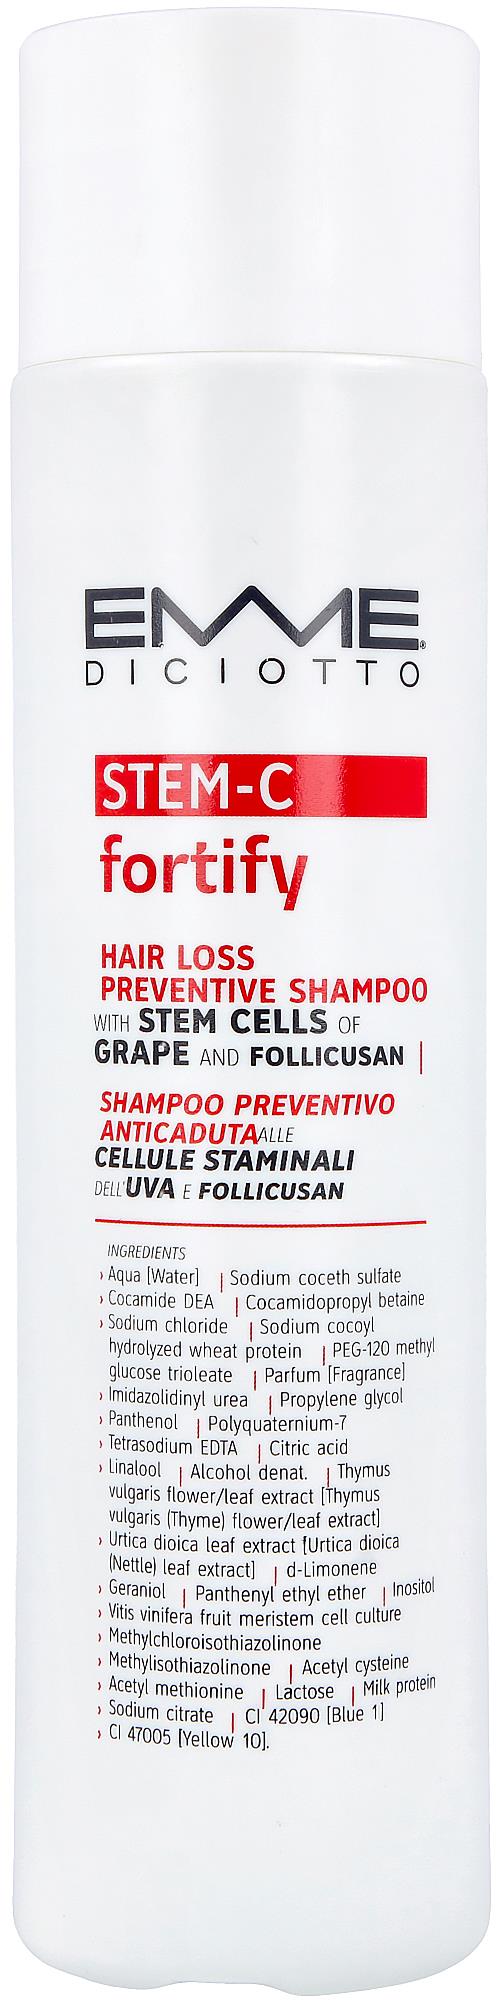 Emmediciotto STEM-C Fortify Hair Loss Preventive Shampoo 250 ml 